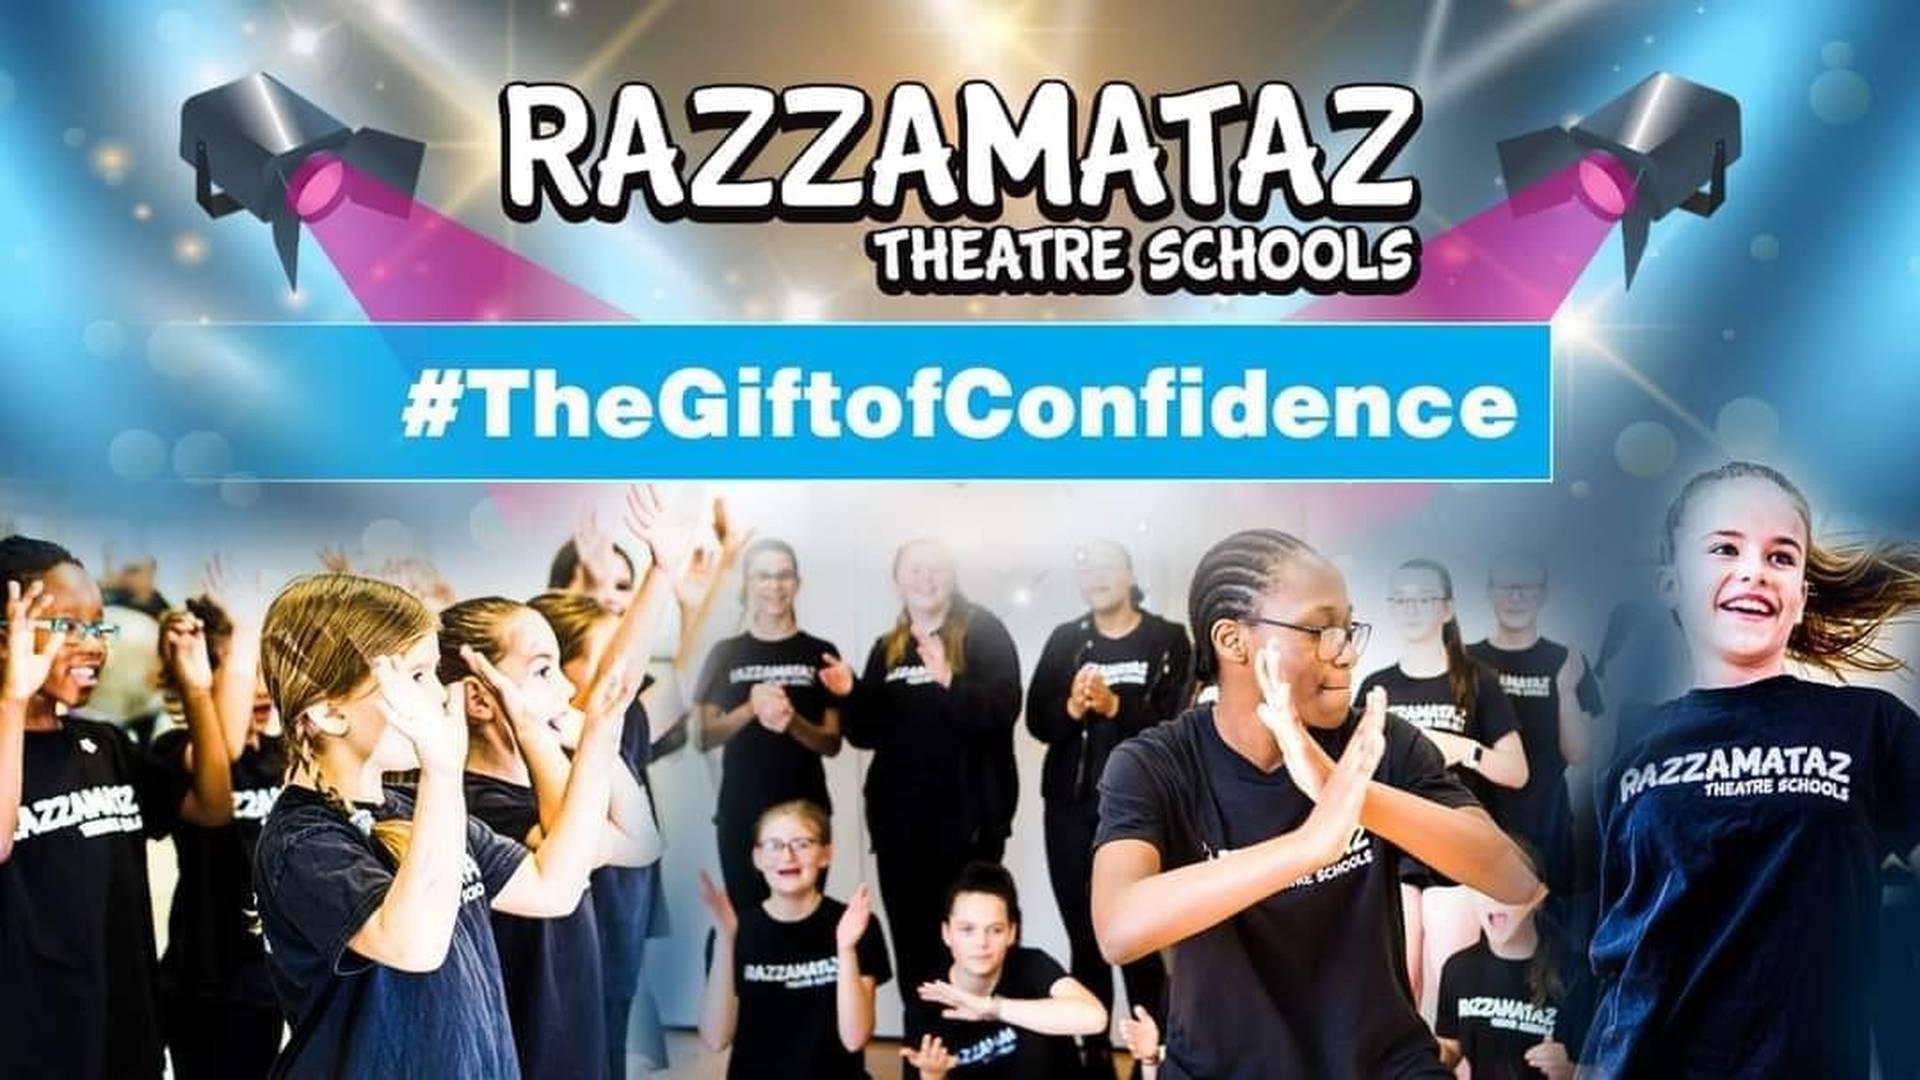 Razzamataz Theatre School photo